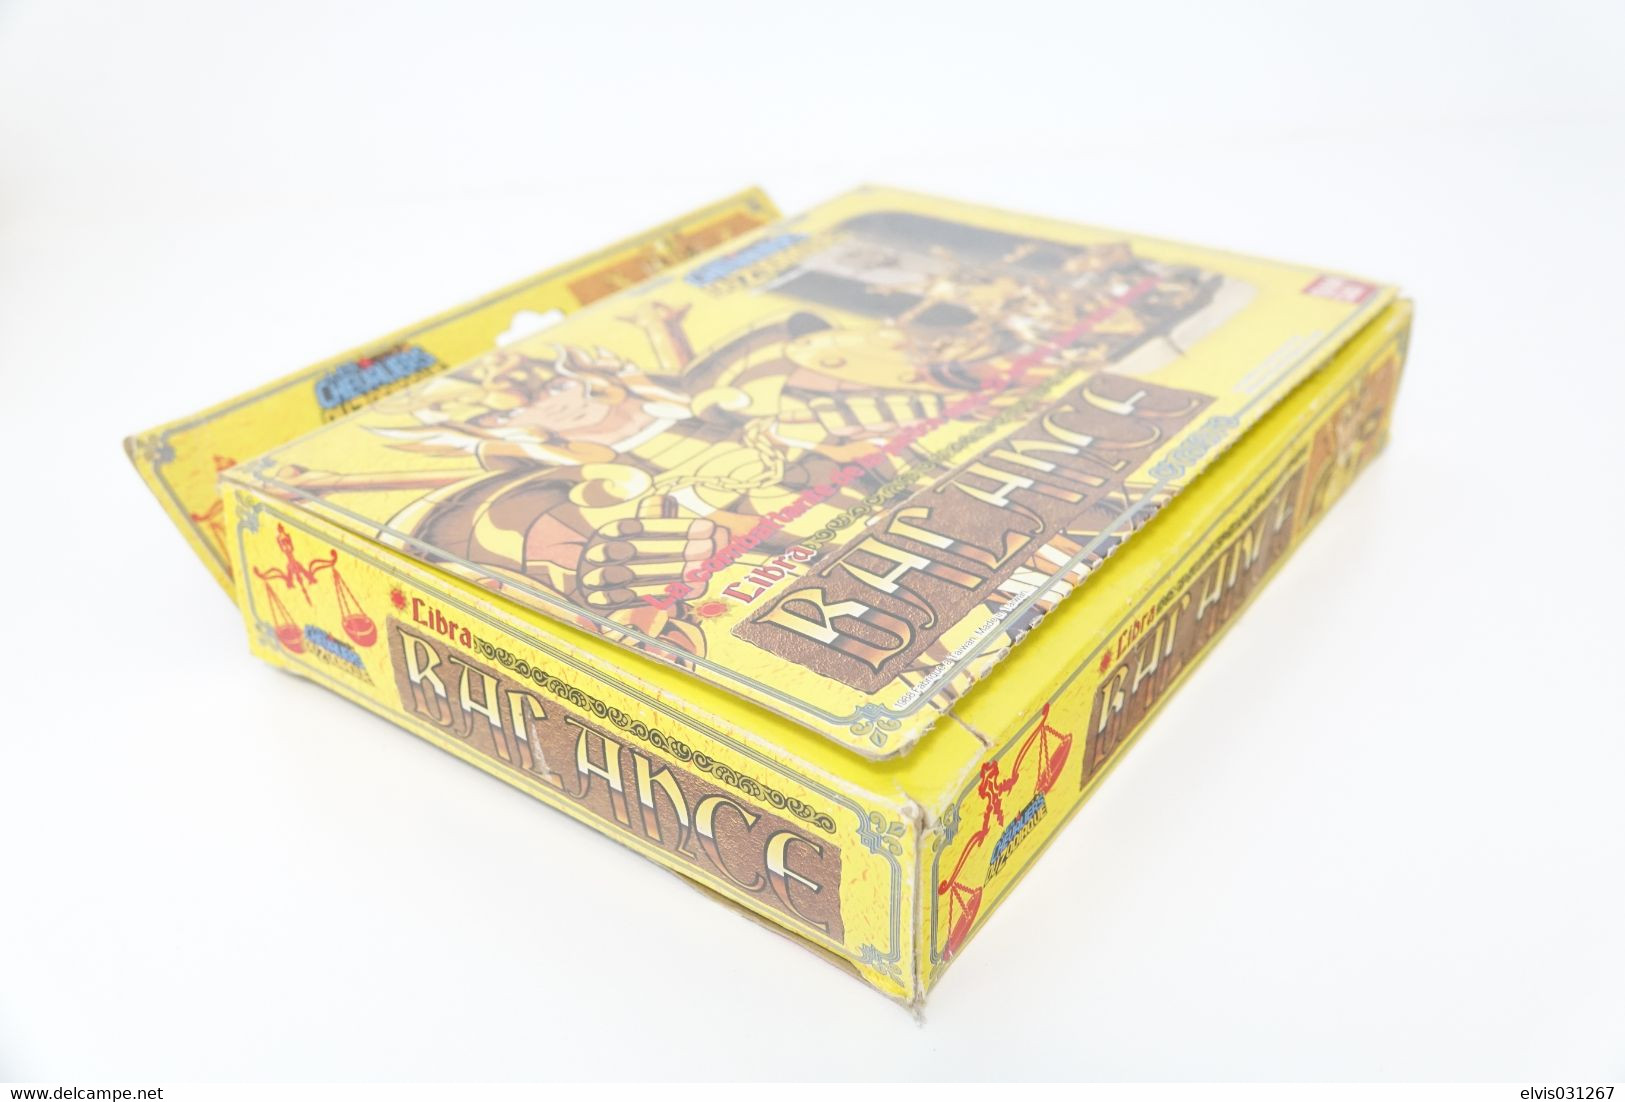 Vintage ACTION FIGURE : SAINT SEIYA : Balance / Dohko W BOX - Original Bandai 1987 - GI JOE - Chevaliers Du Zodiaque - Action Man